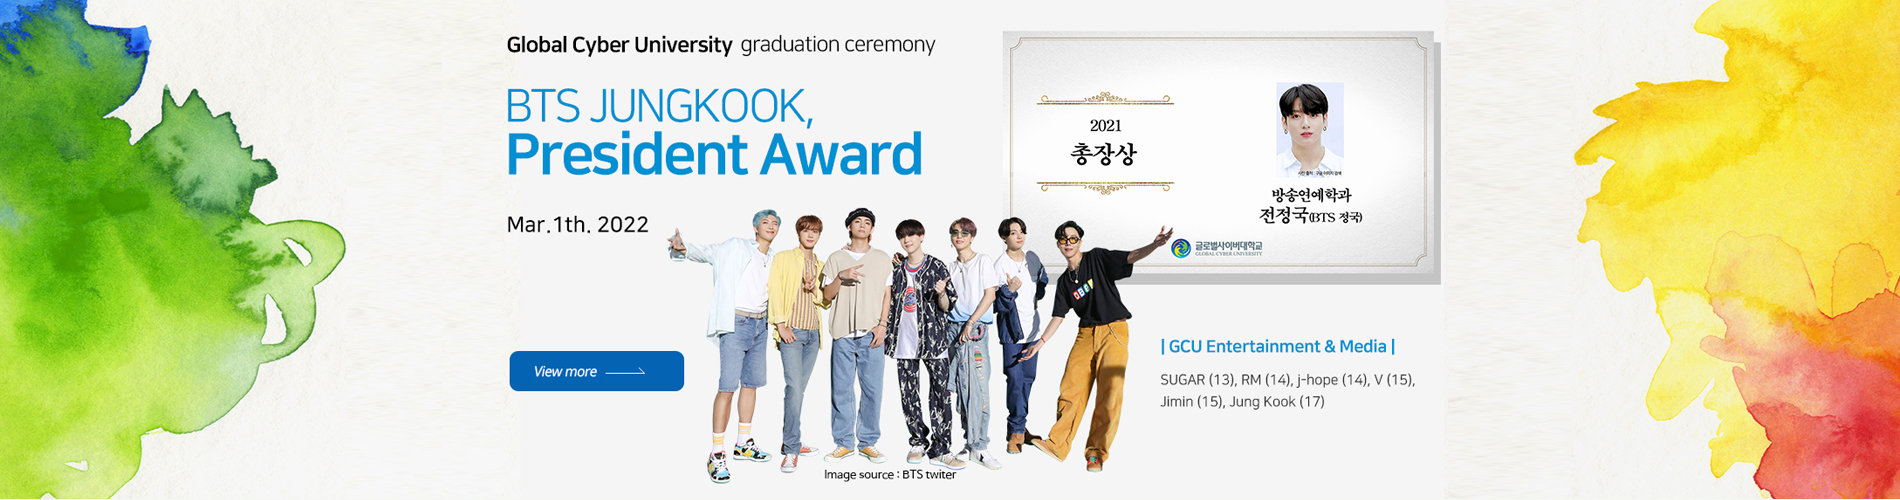 al Cyber University graduation ceremony, BTS JUNGKOOK, President Award,  Mar.1th. 2022, 